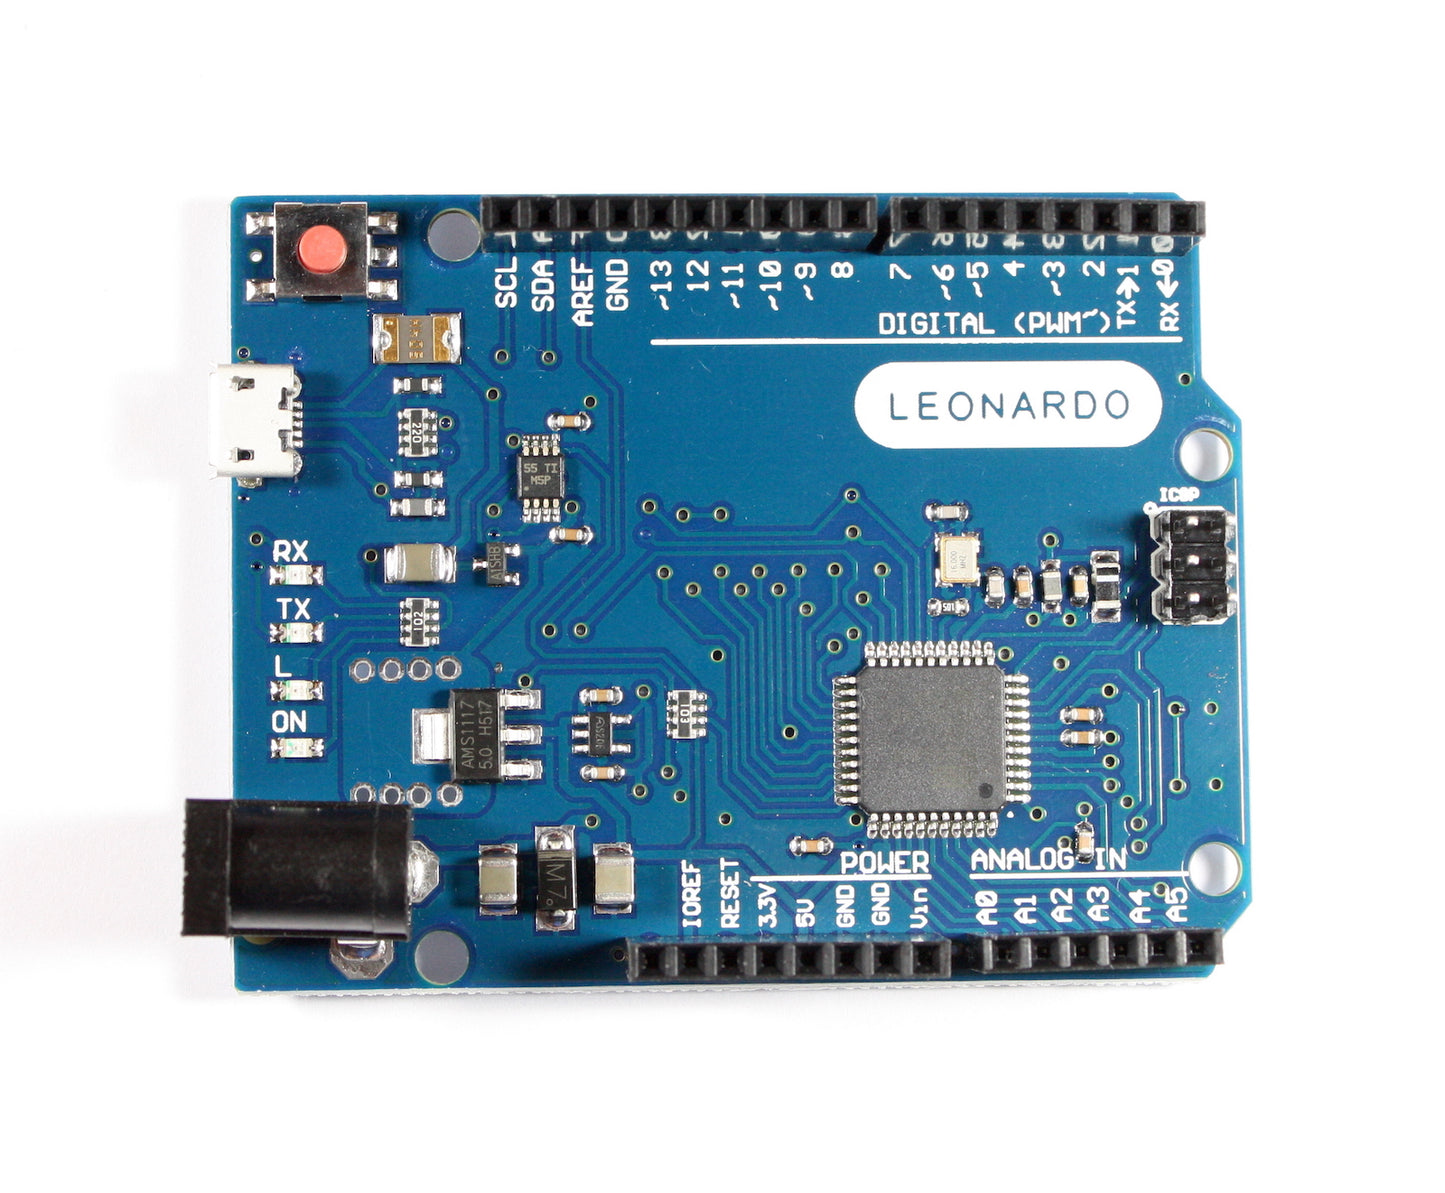 Leonardo Module with ATmega32U4 and USB Cable, 5V, 16MHz, Arduino compatible